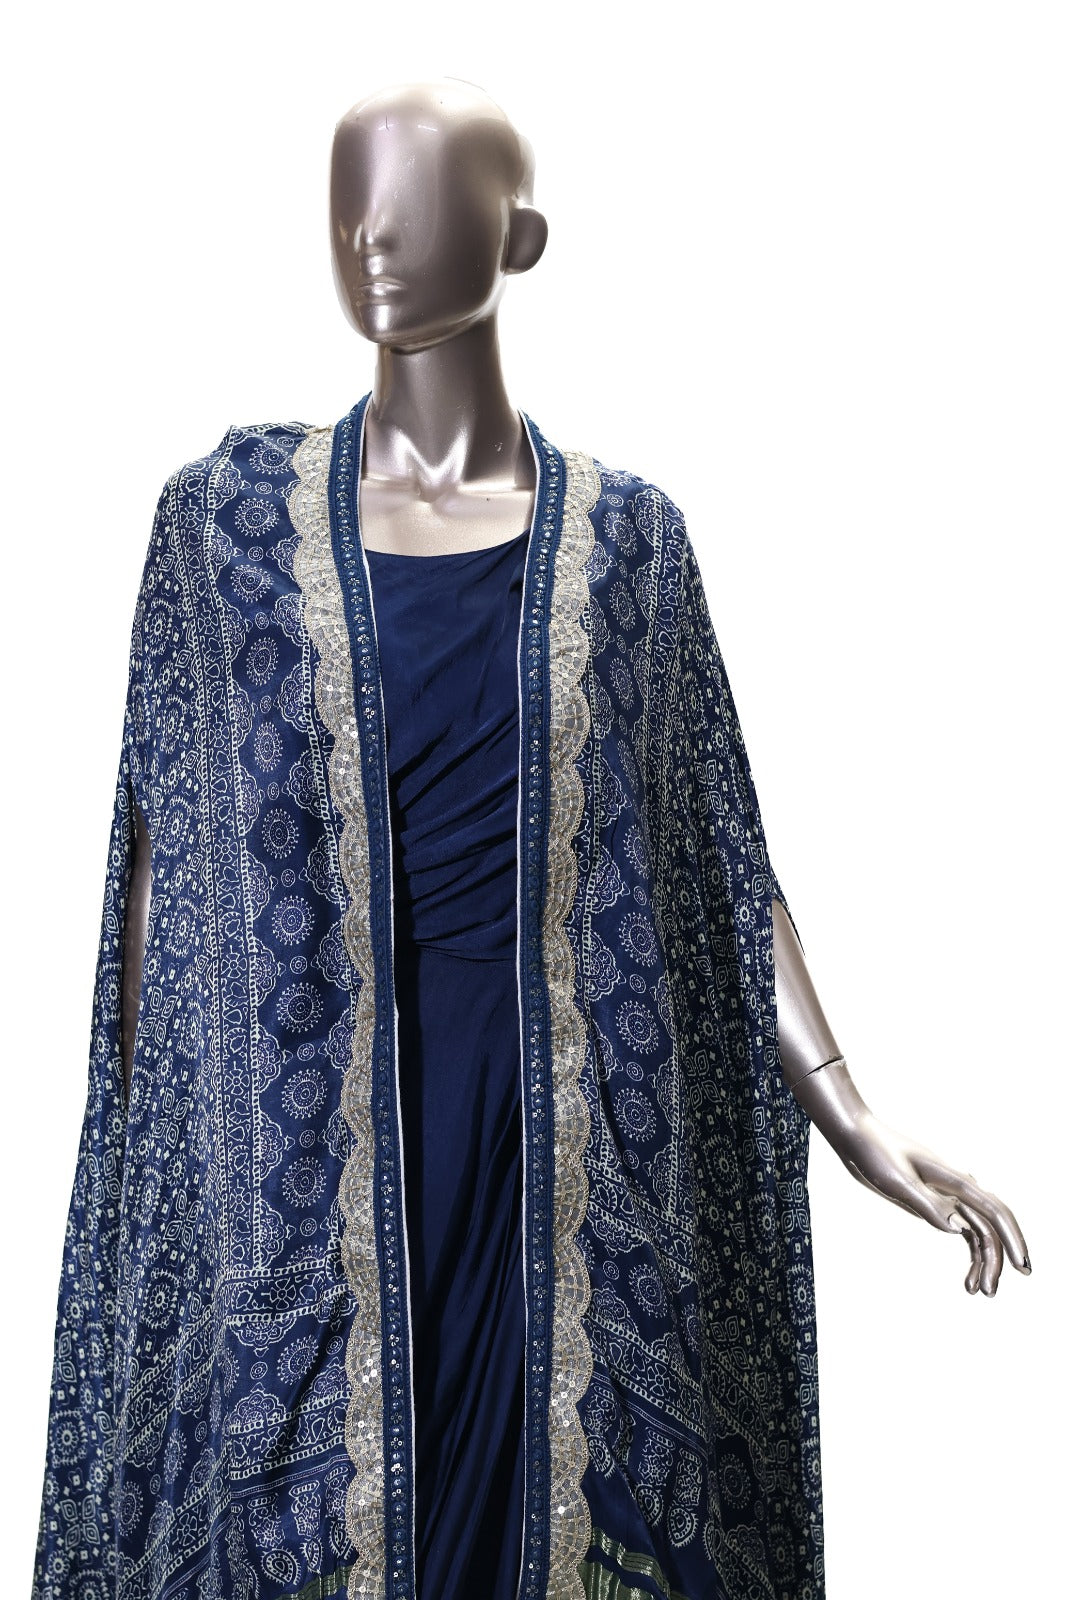 Draped Dress With Hand Embroidered Cape - Shivangi Joshi's Choice